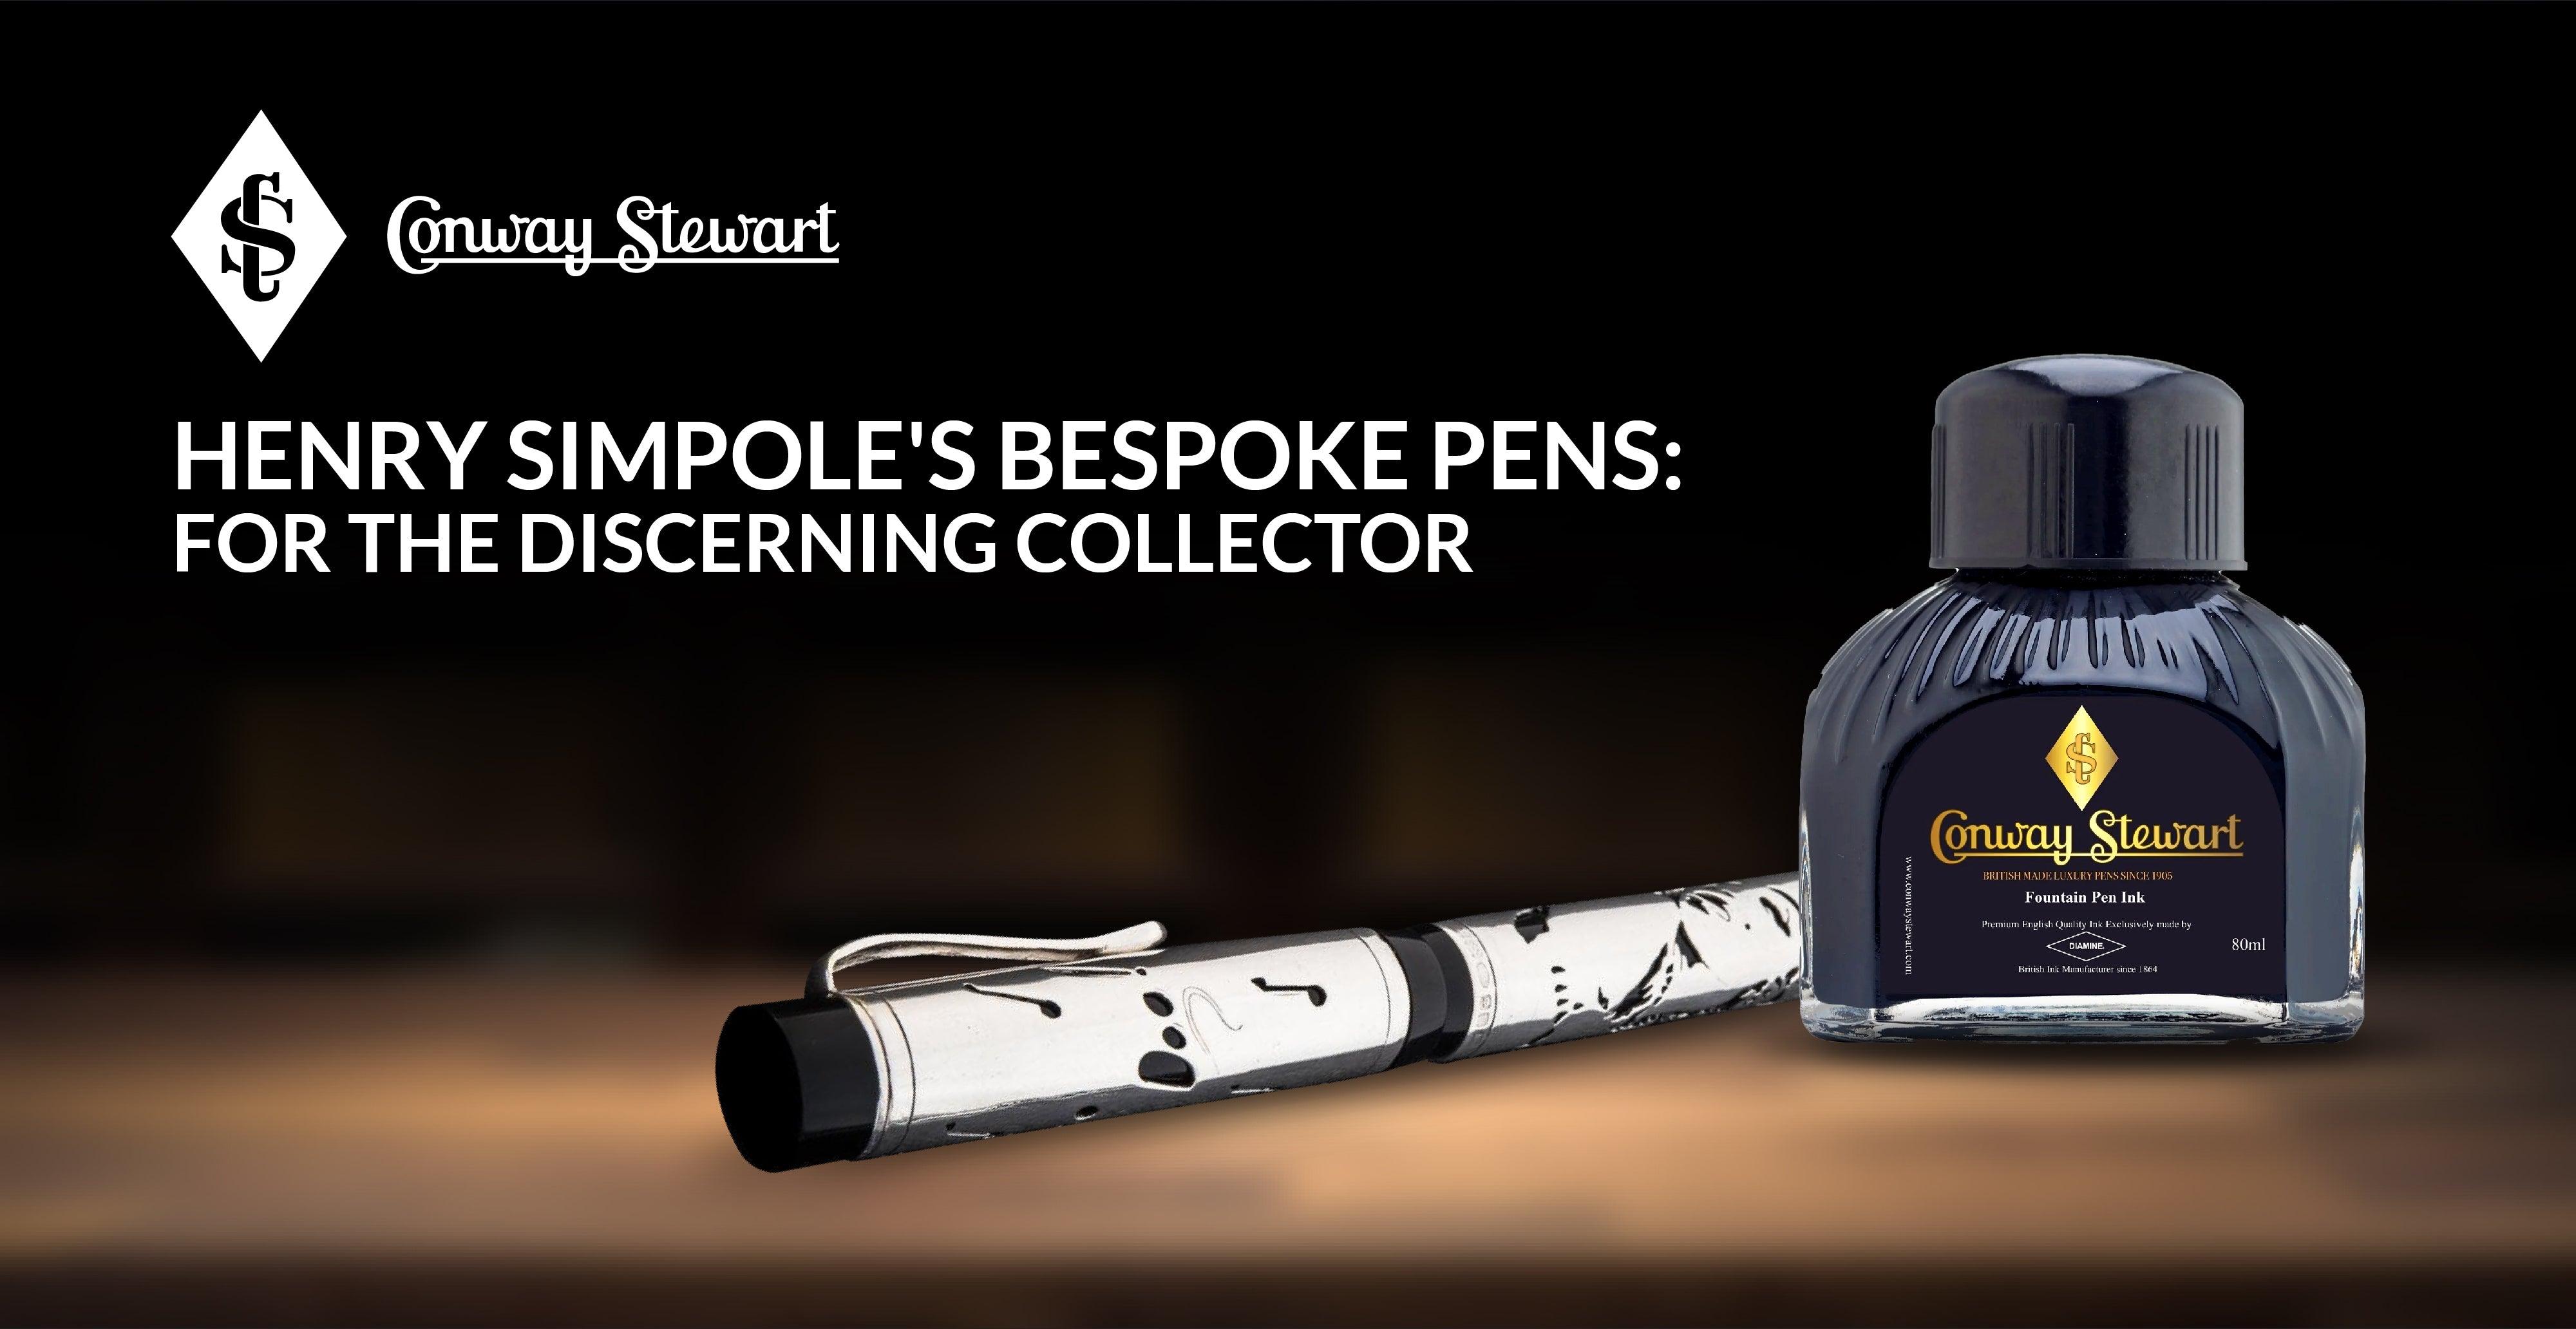 Henry Simpole's Bespoke Pens, 2007 - Conway Stewart